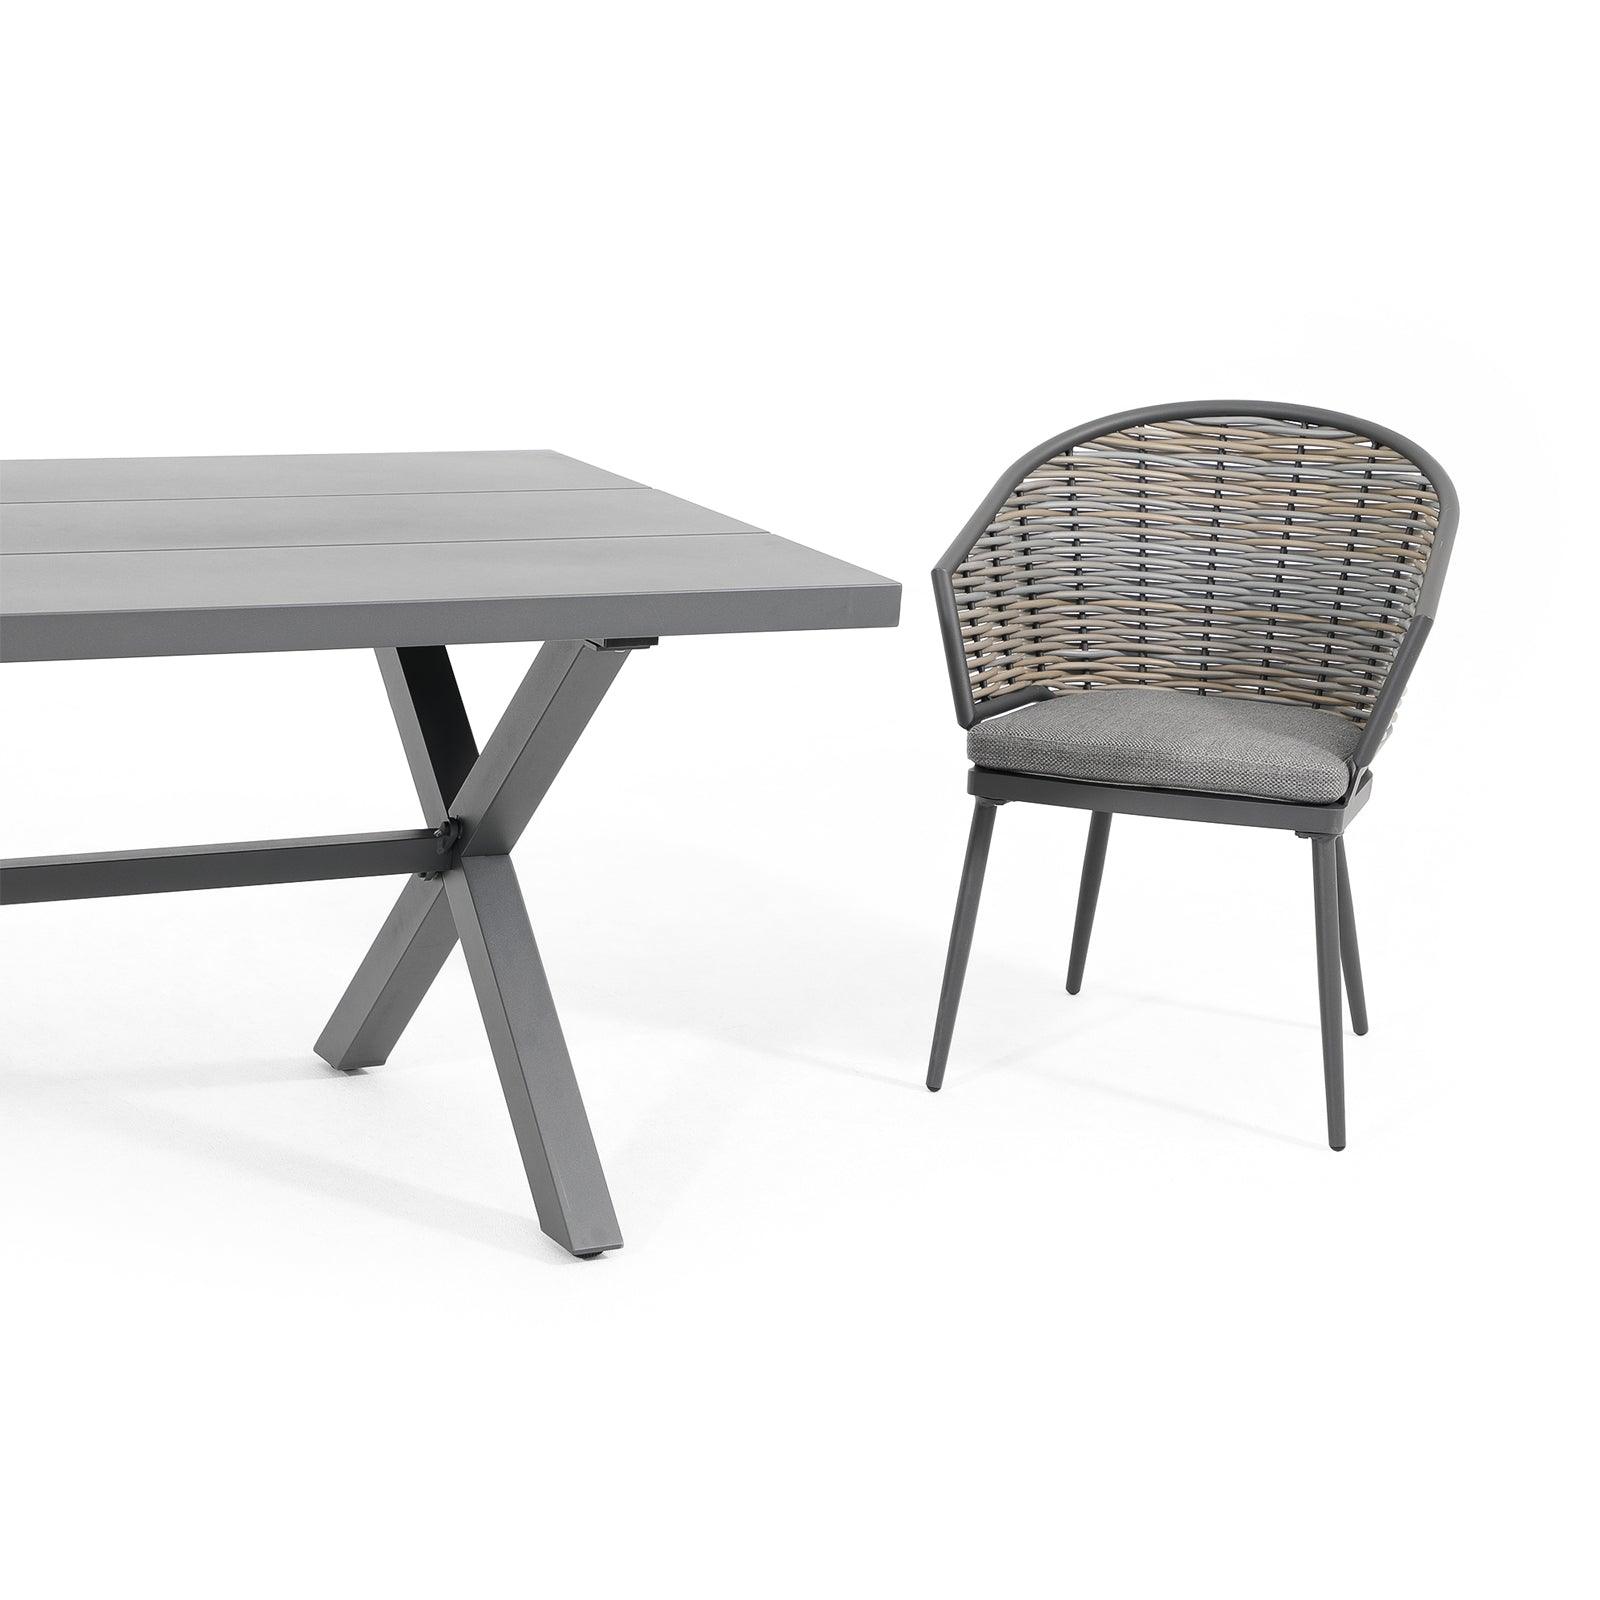 Burano Grey wicker outdoor Dining seat with aluminum frame, grey cushions, left - Jardina Furniture